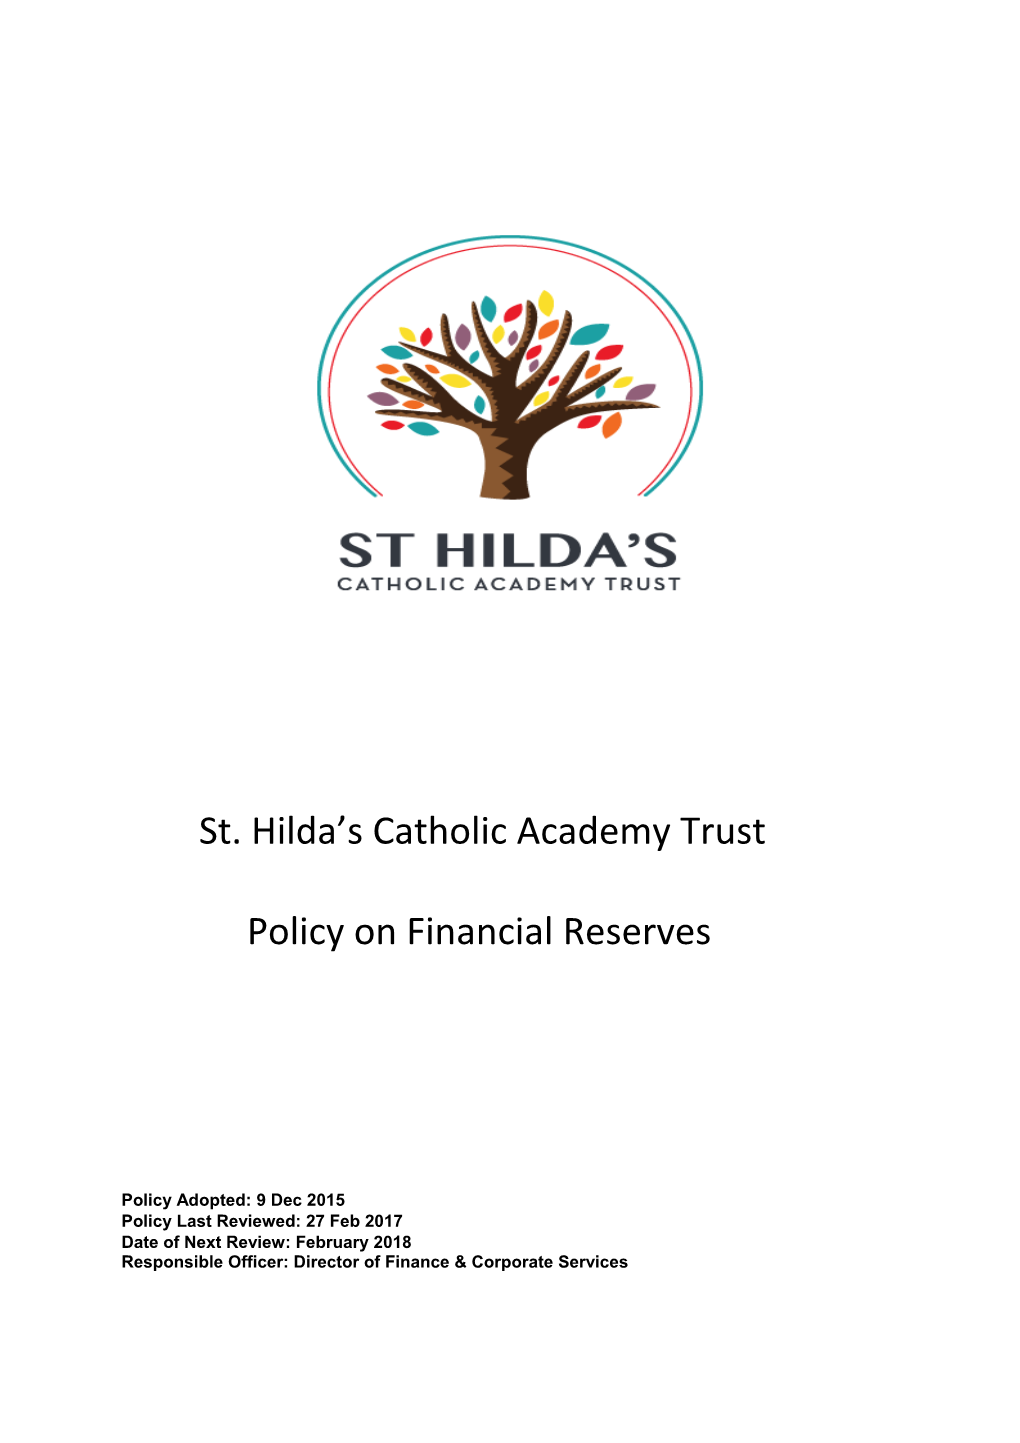 St. Hilda S Catholic Academy Trust